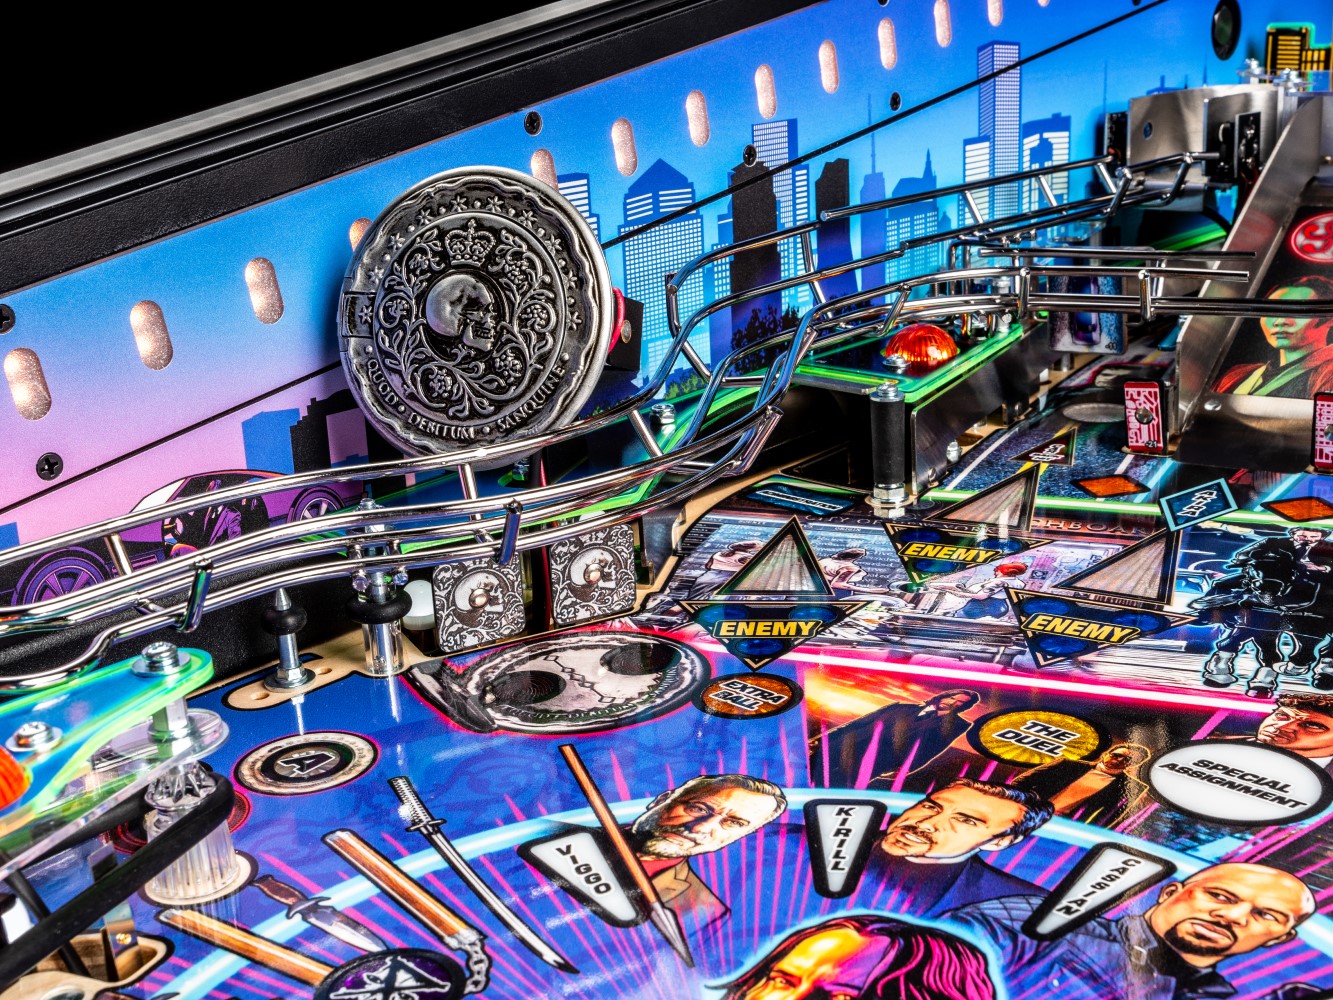 John Wick Pinball Game Announced - MonsterVine